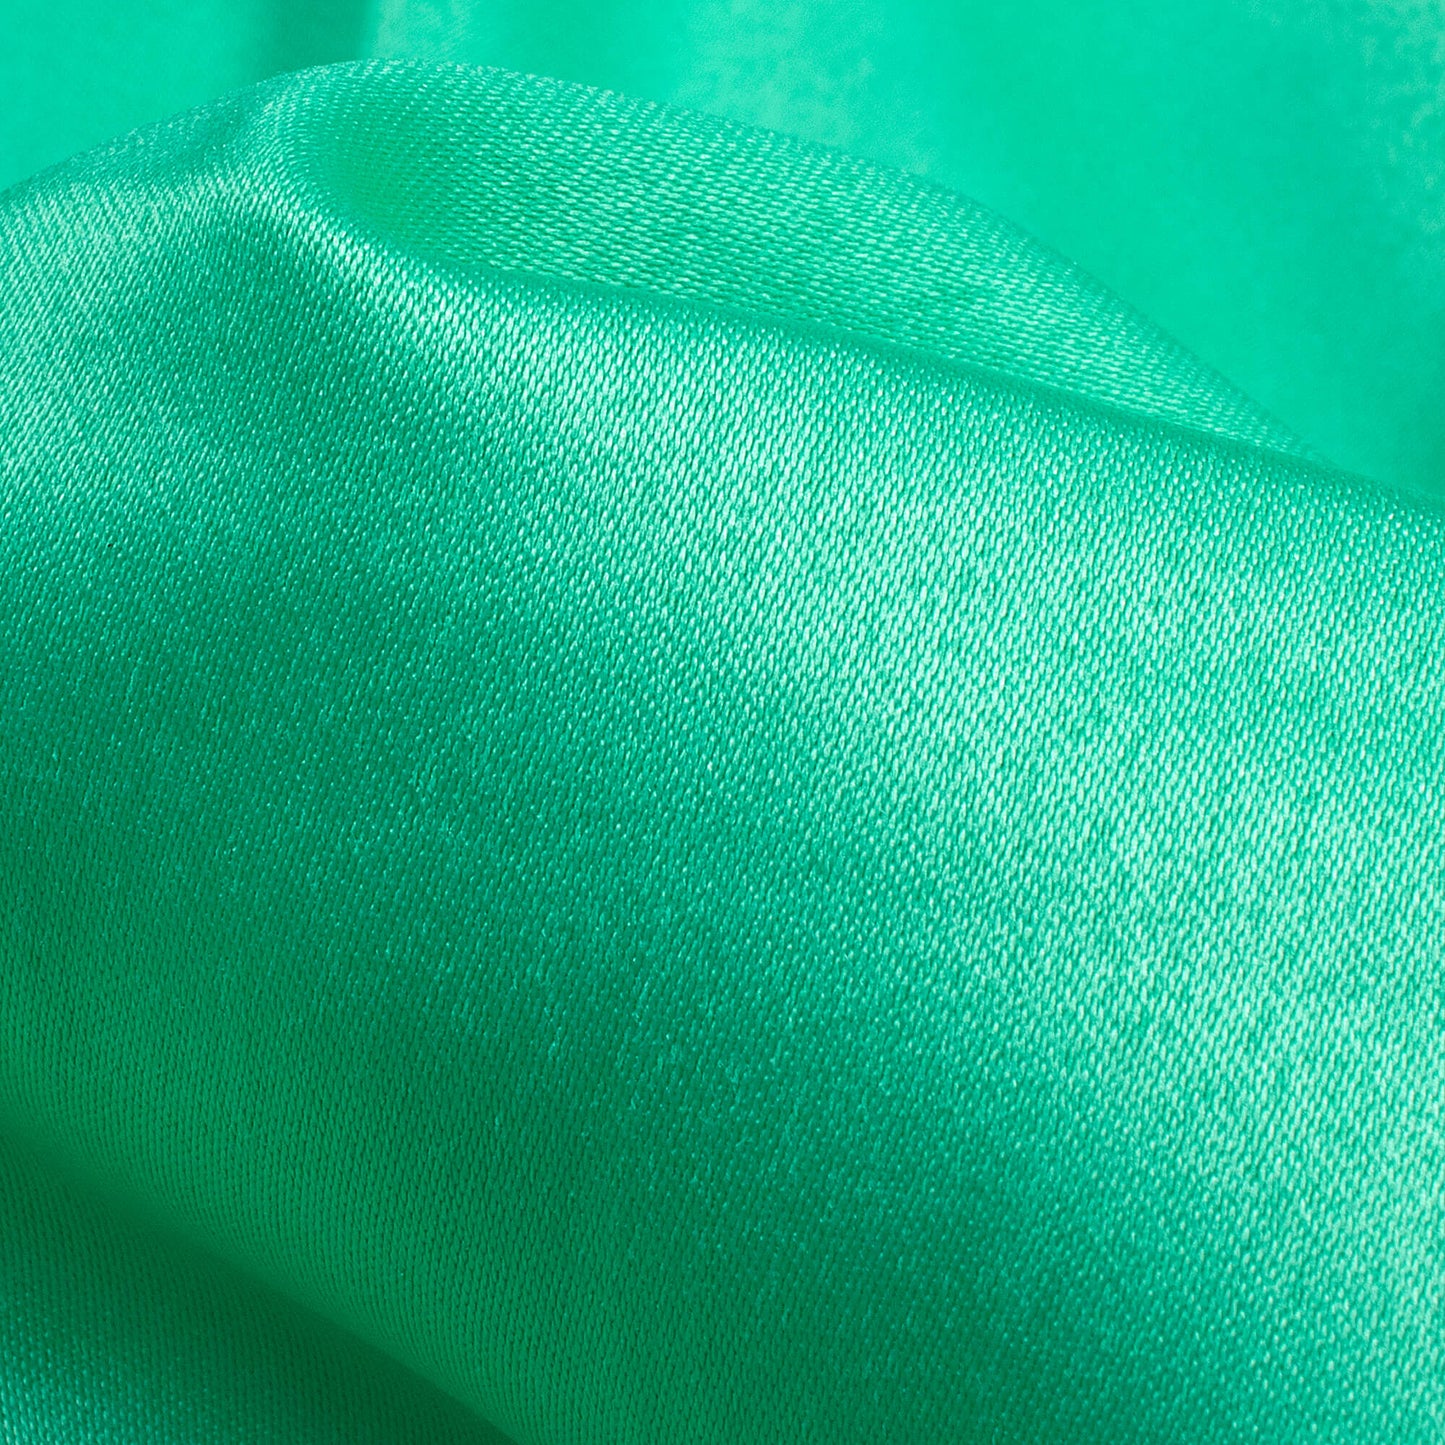 Aquamarine Plain Butter Silk Satin Fabric (Width 58 Inches)